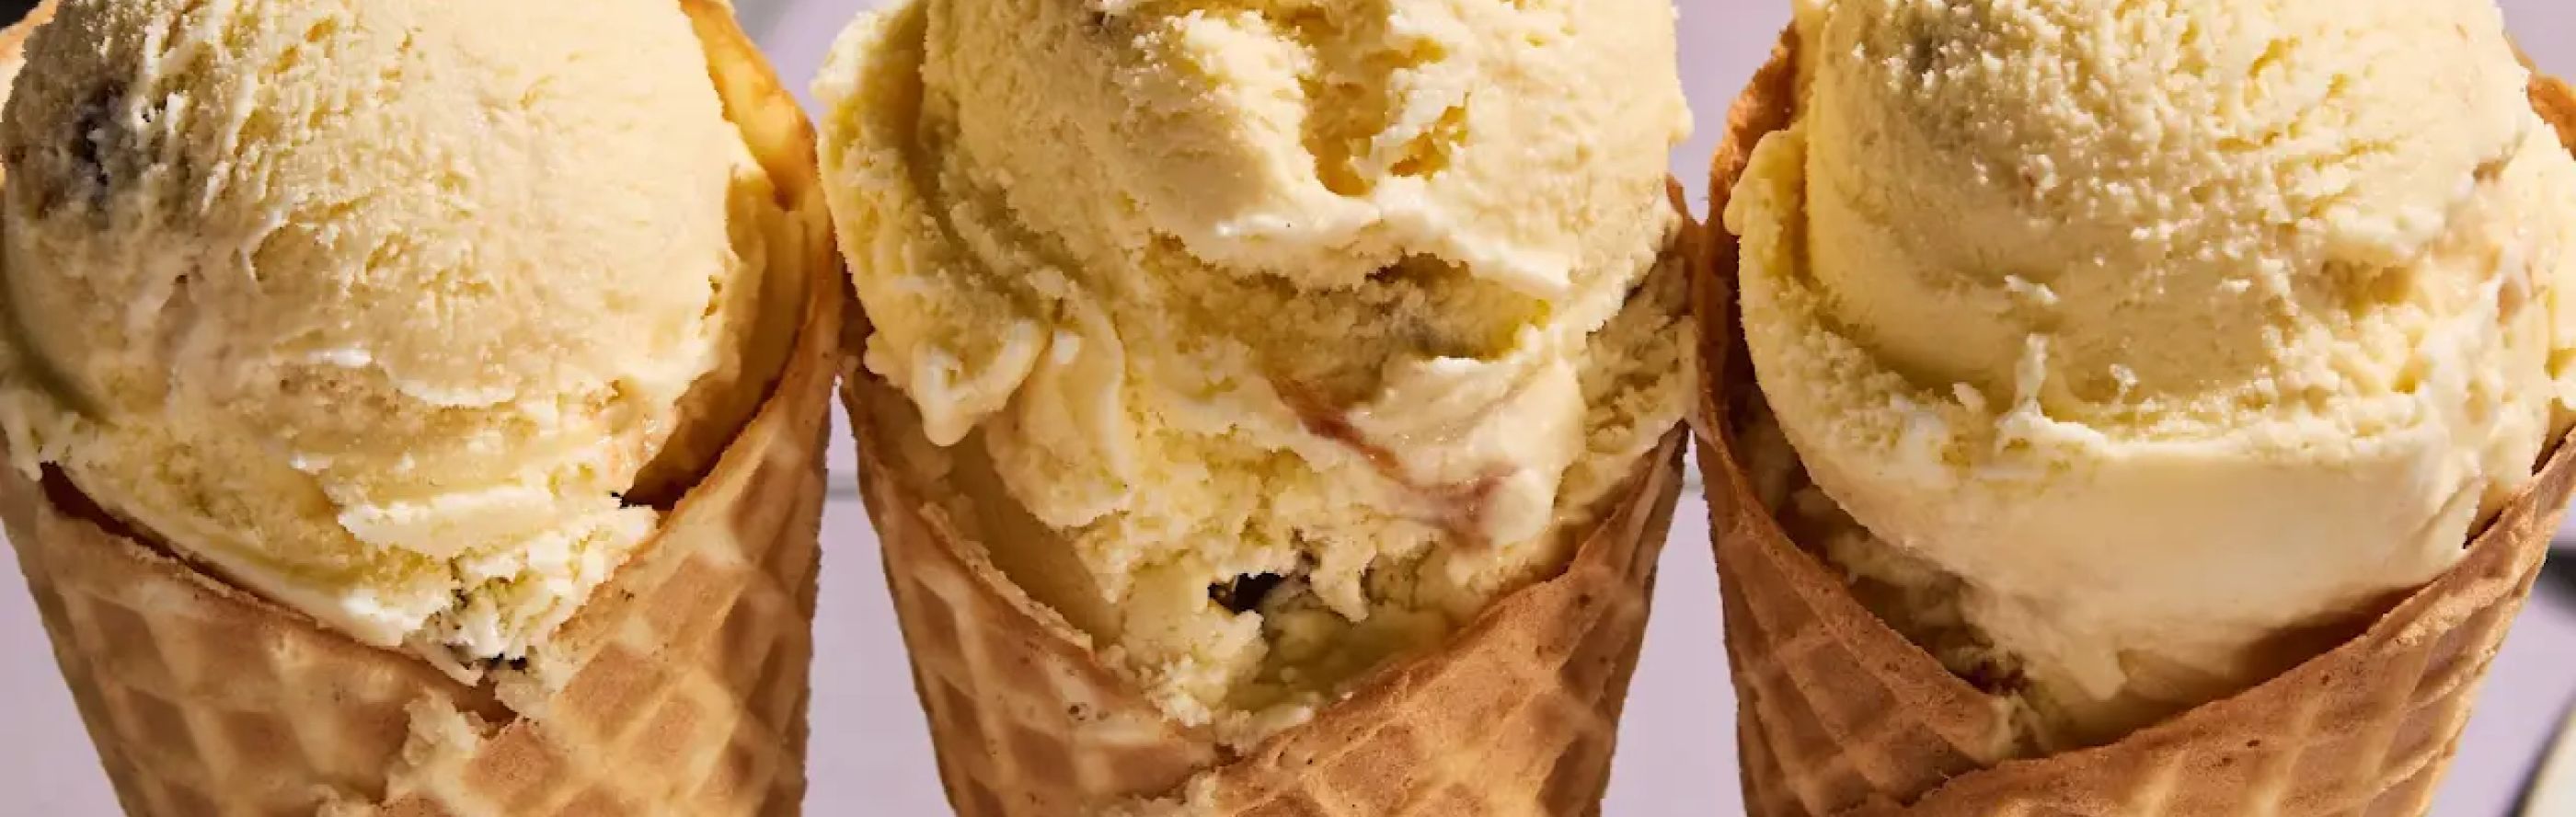 Yummly ice cream recipe in waffle cones